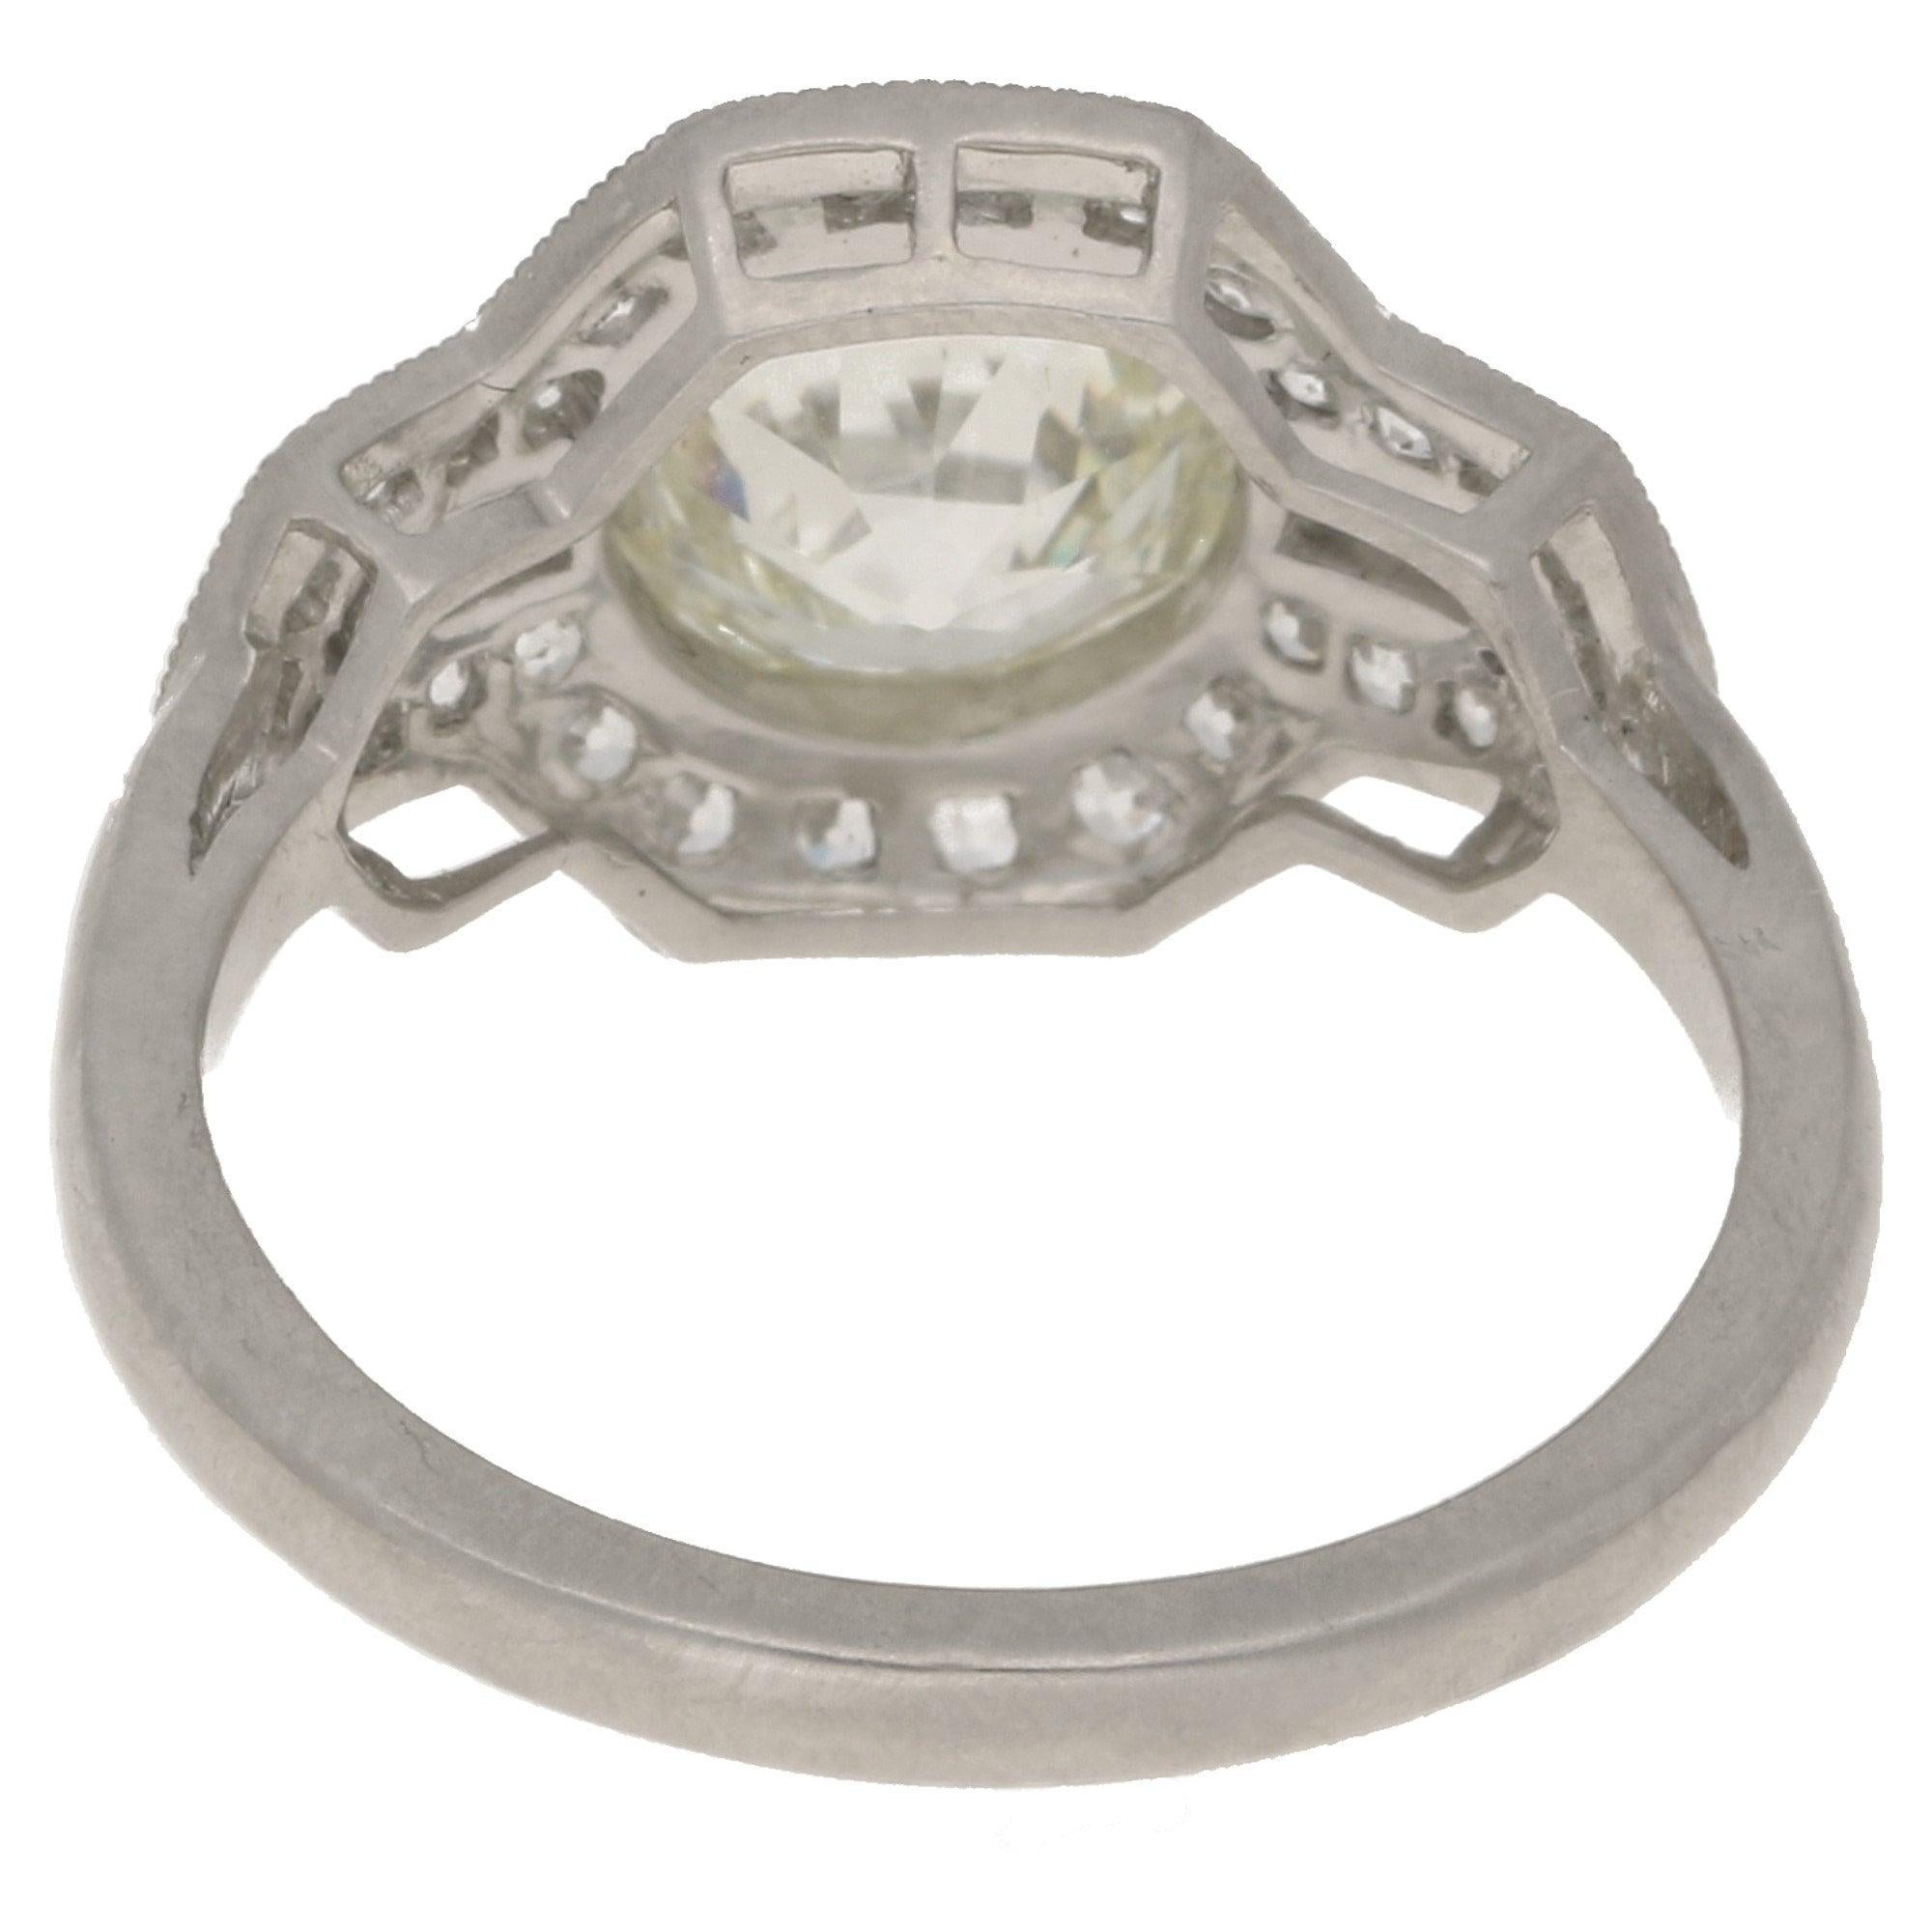 Women's or Men's Art Deco Inspired Old European Cut Diamond Engagement Ring Set in Platinum